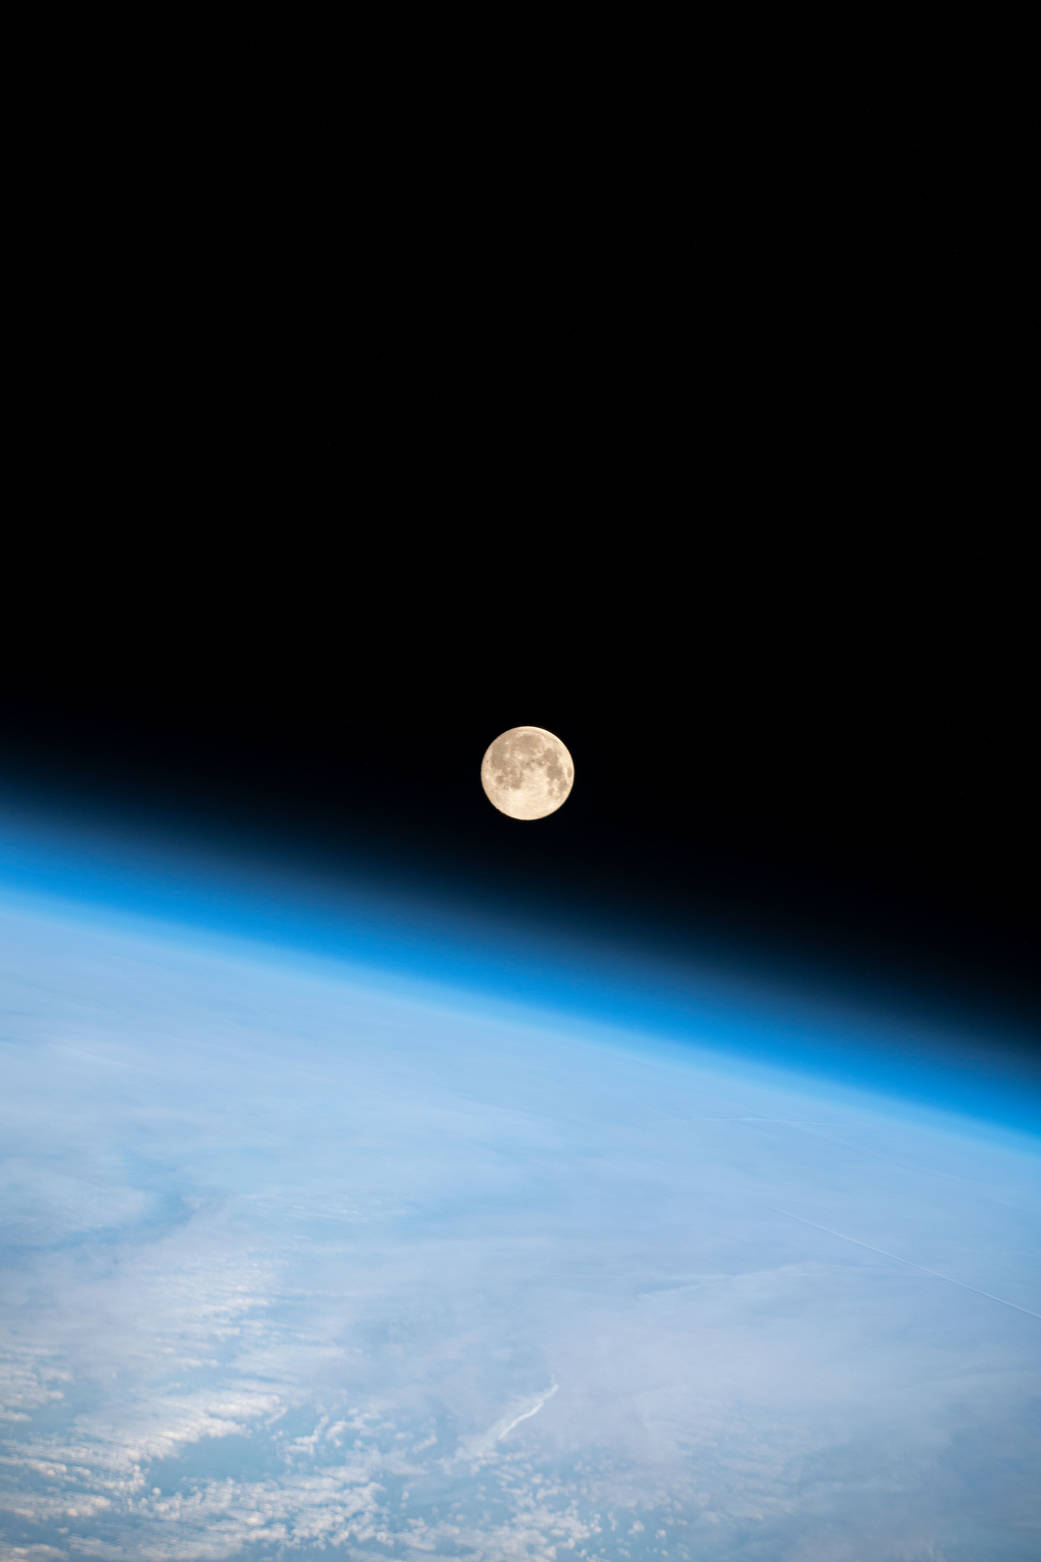 Full Moon above the Earth's horizon